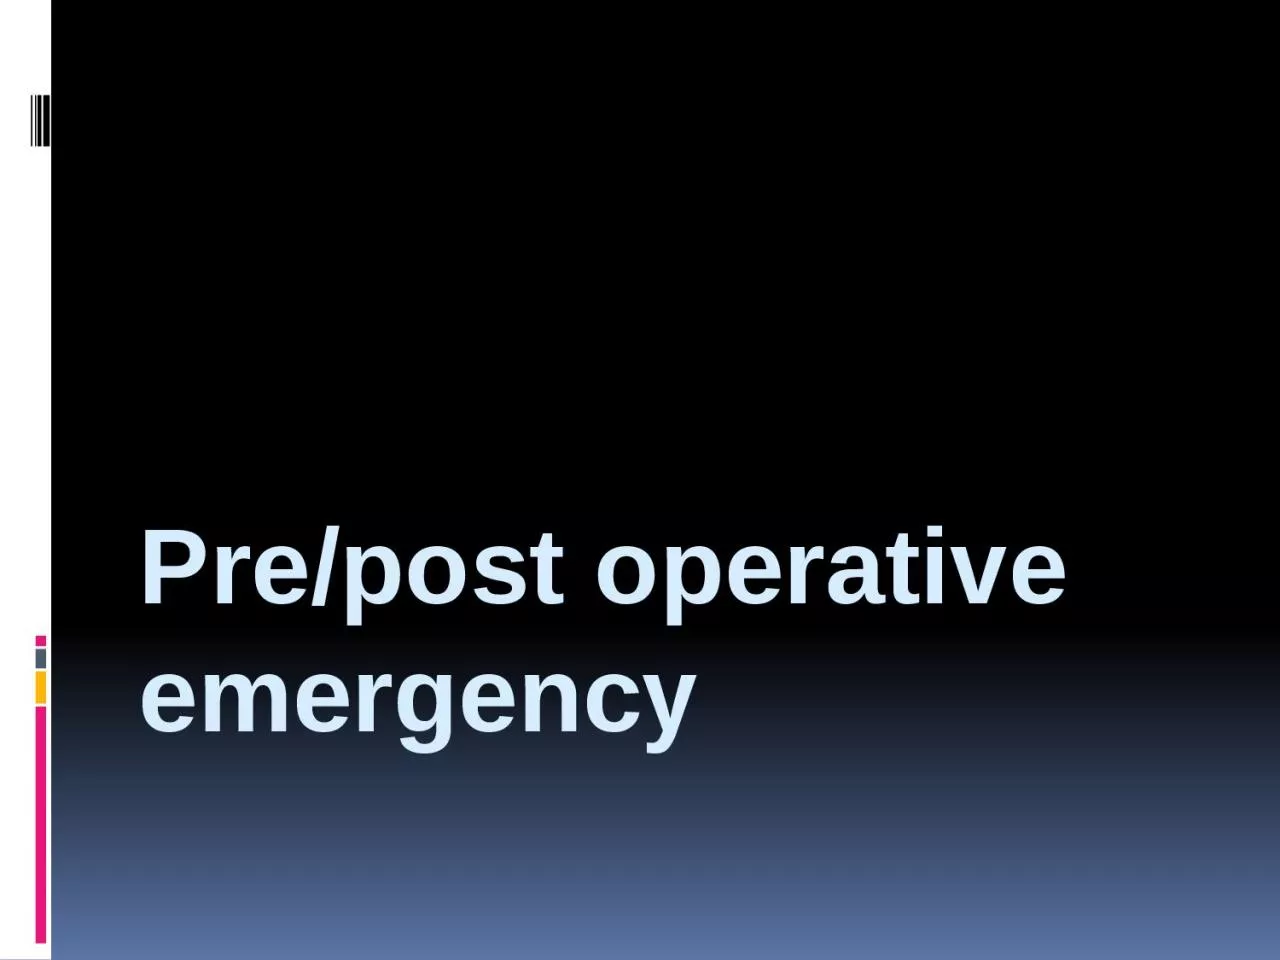 Pre/post operative emergency